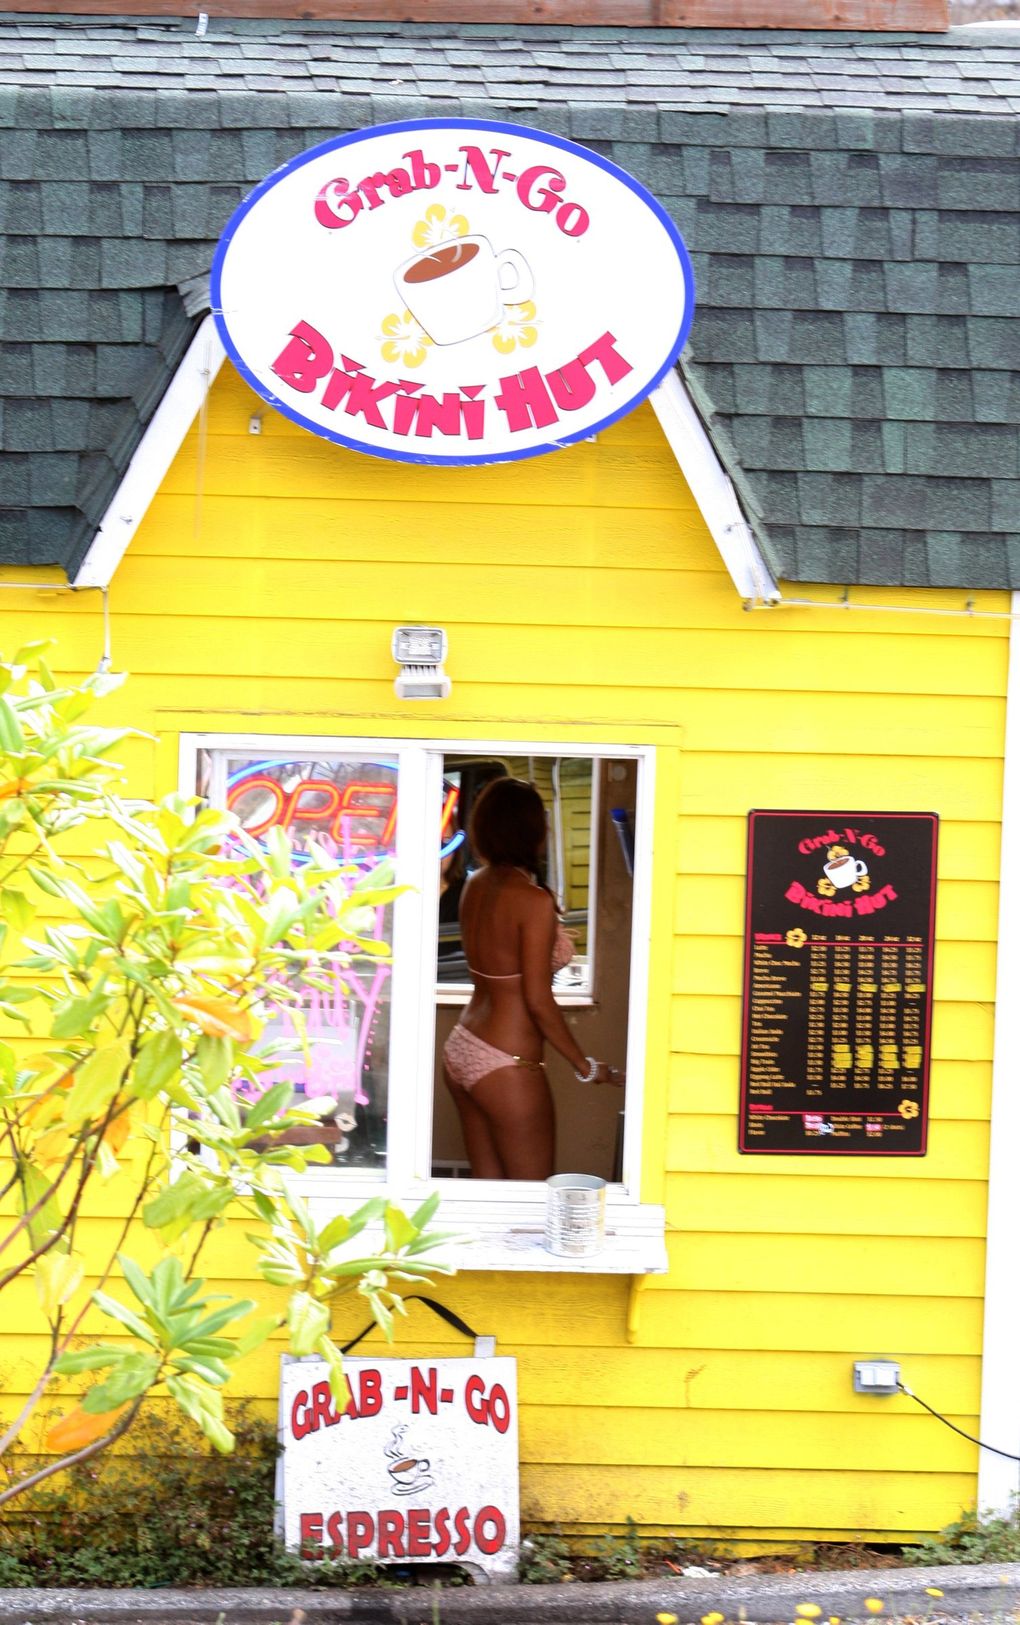 Bikini baristas sue Everett, say bare-skin ban violates their